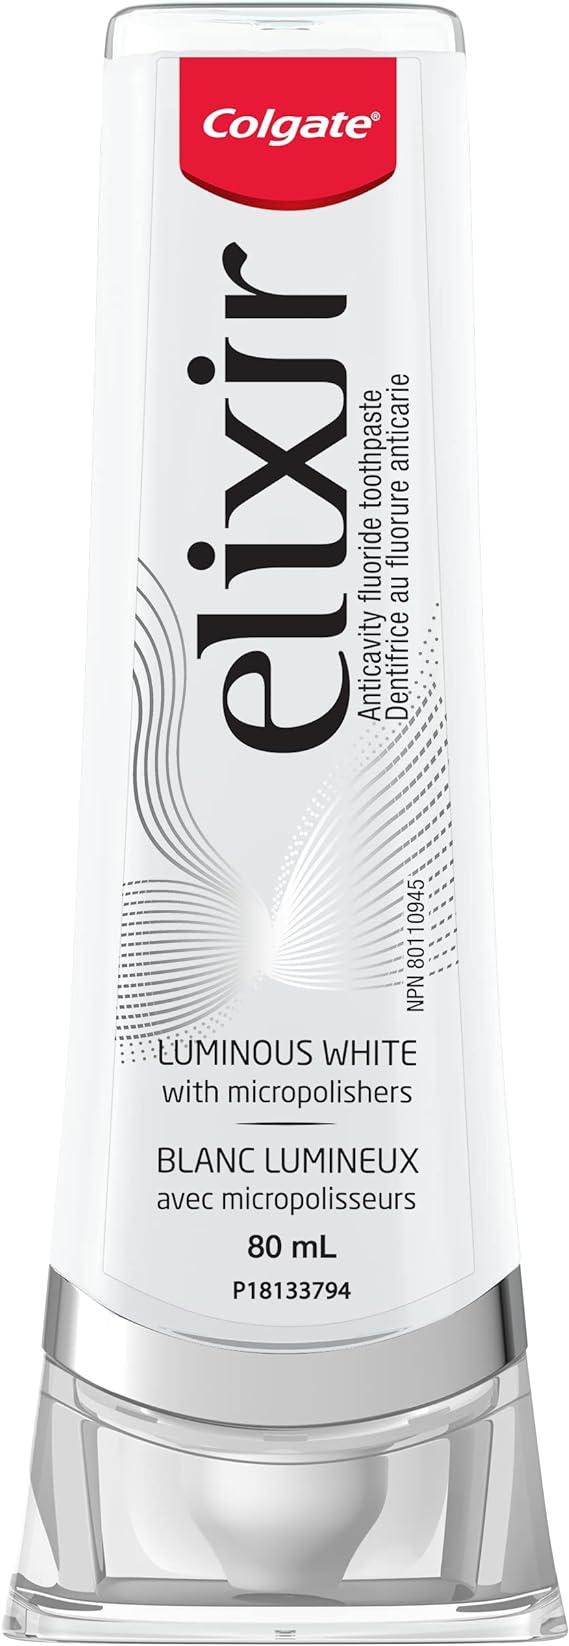 colgate elixir luminous white toothpaste 80 ml  colgate ?b09mv5k1r2